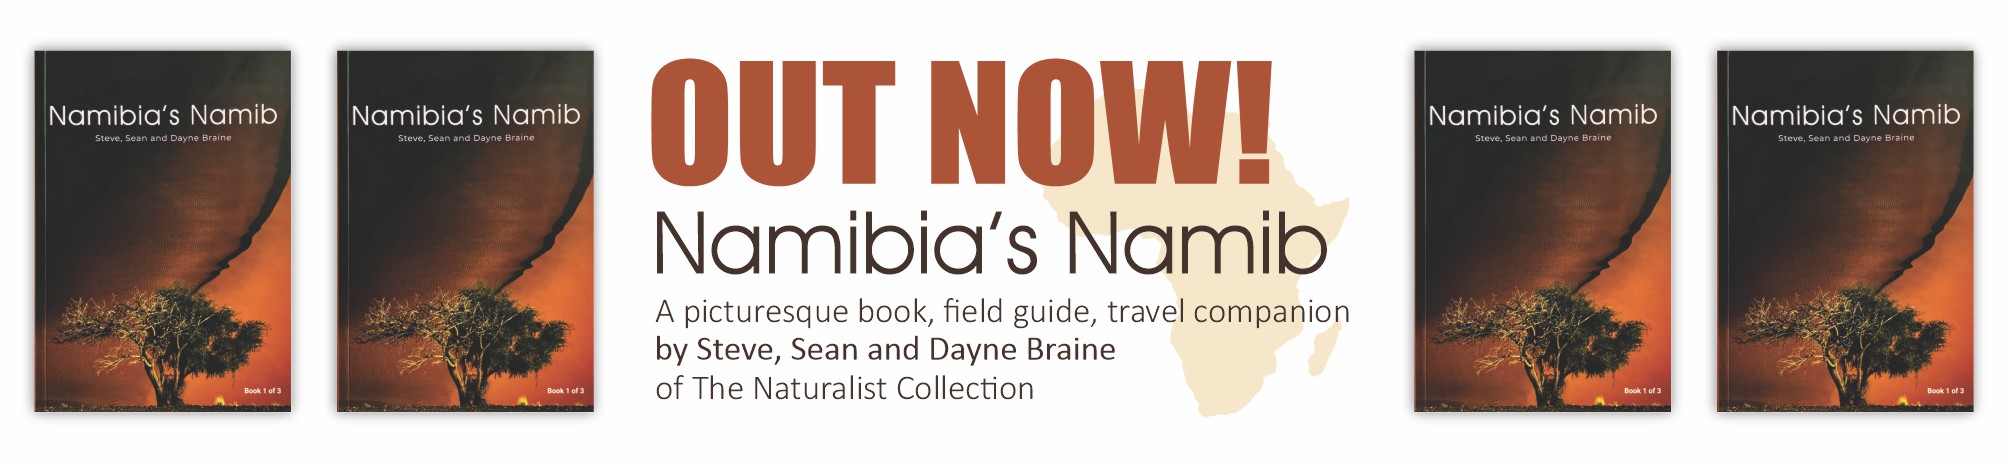 Book: Namibia's Namib